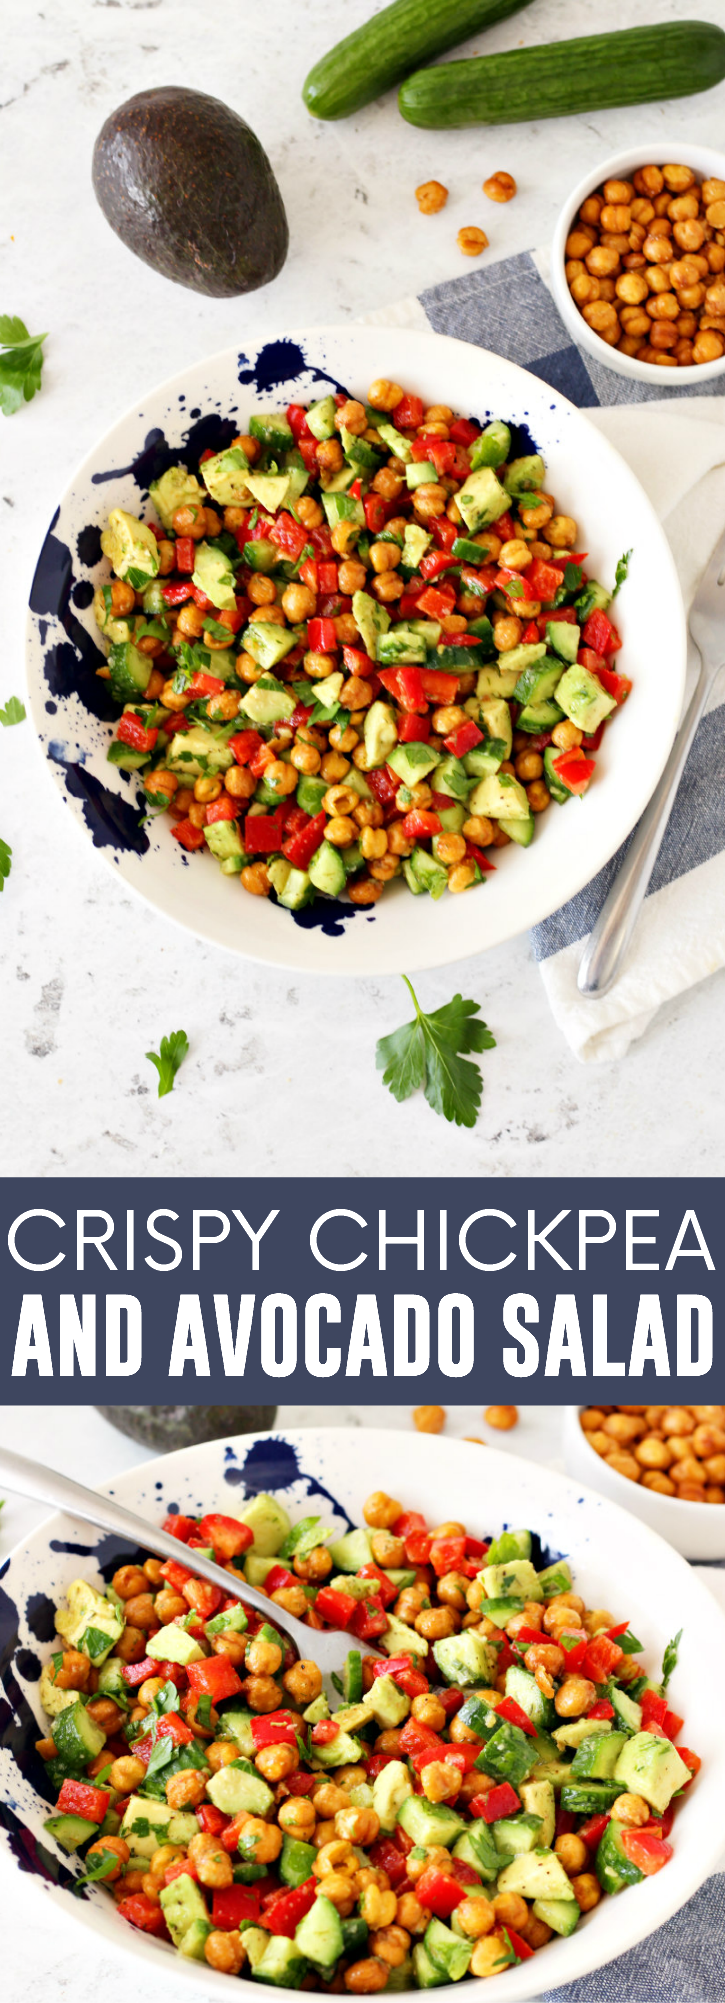 Crispy Chickpea and Avocado Salad pinnable image.